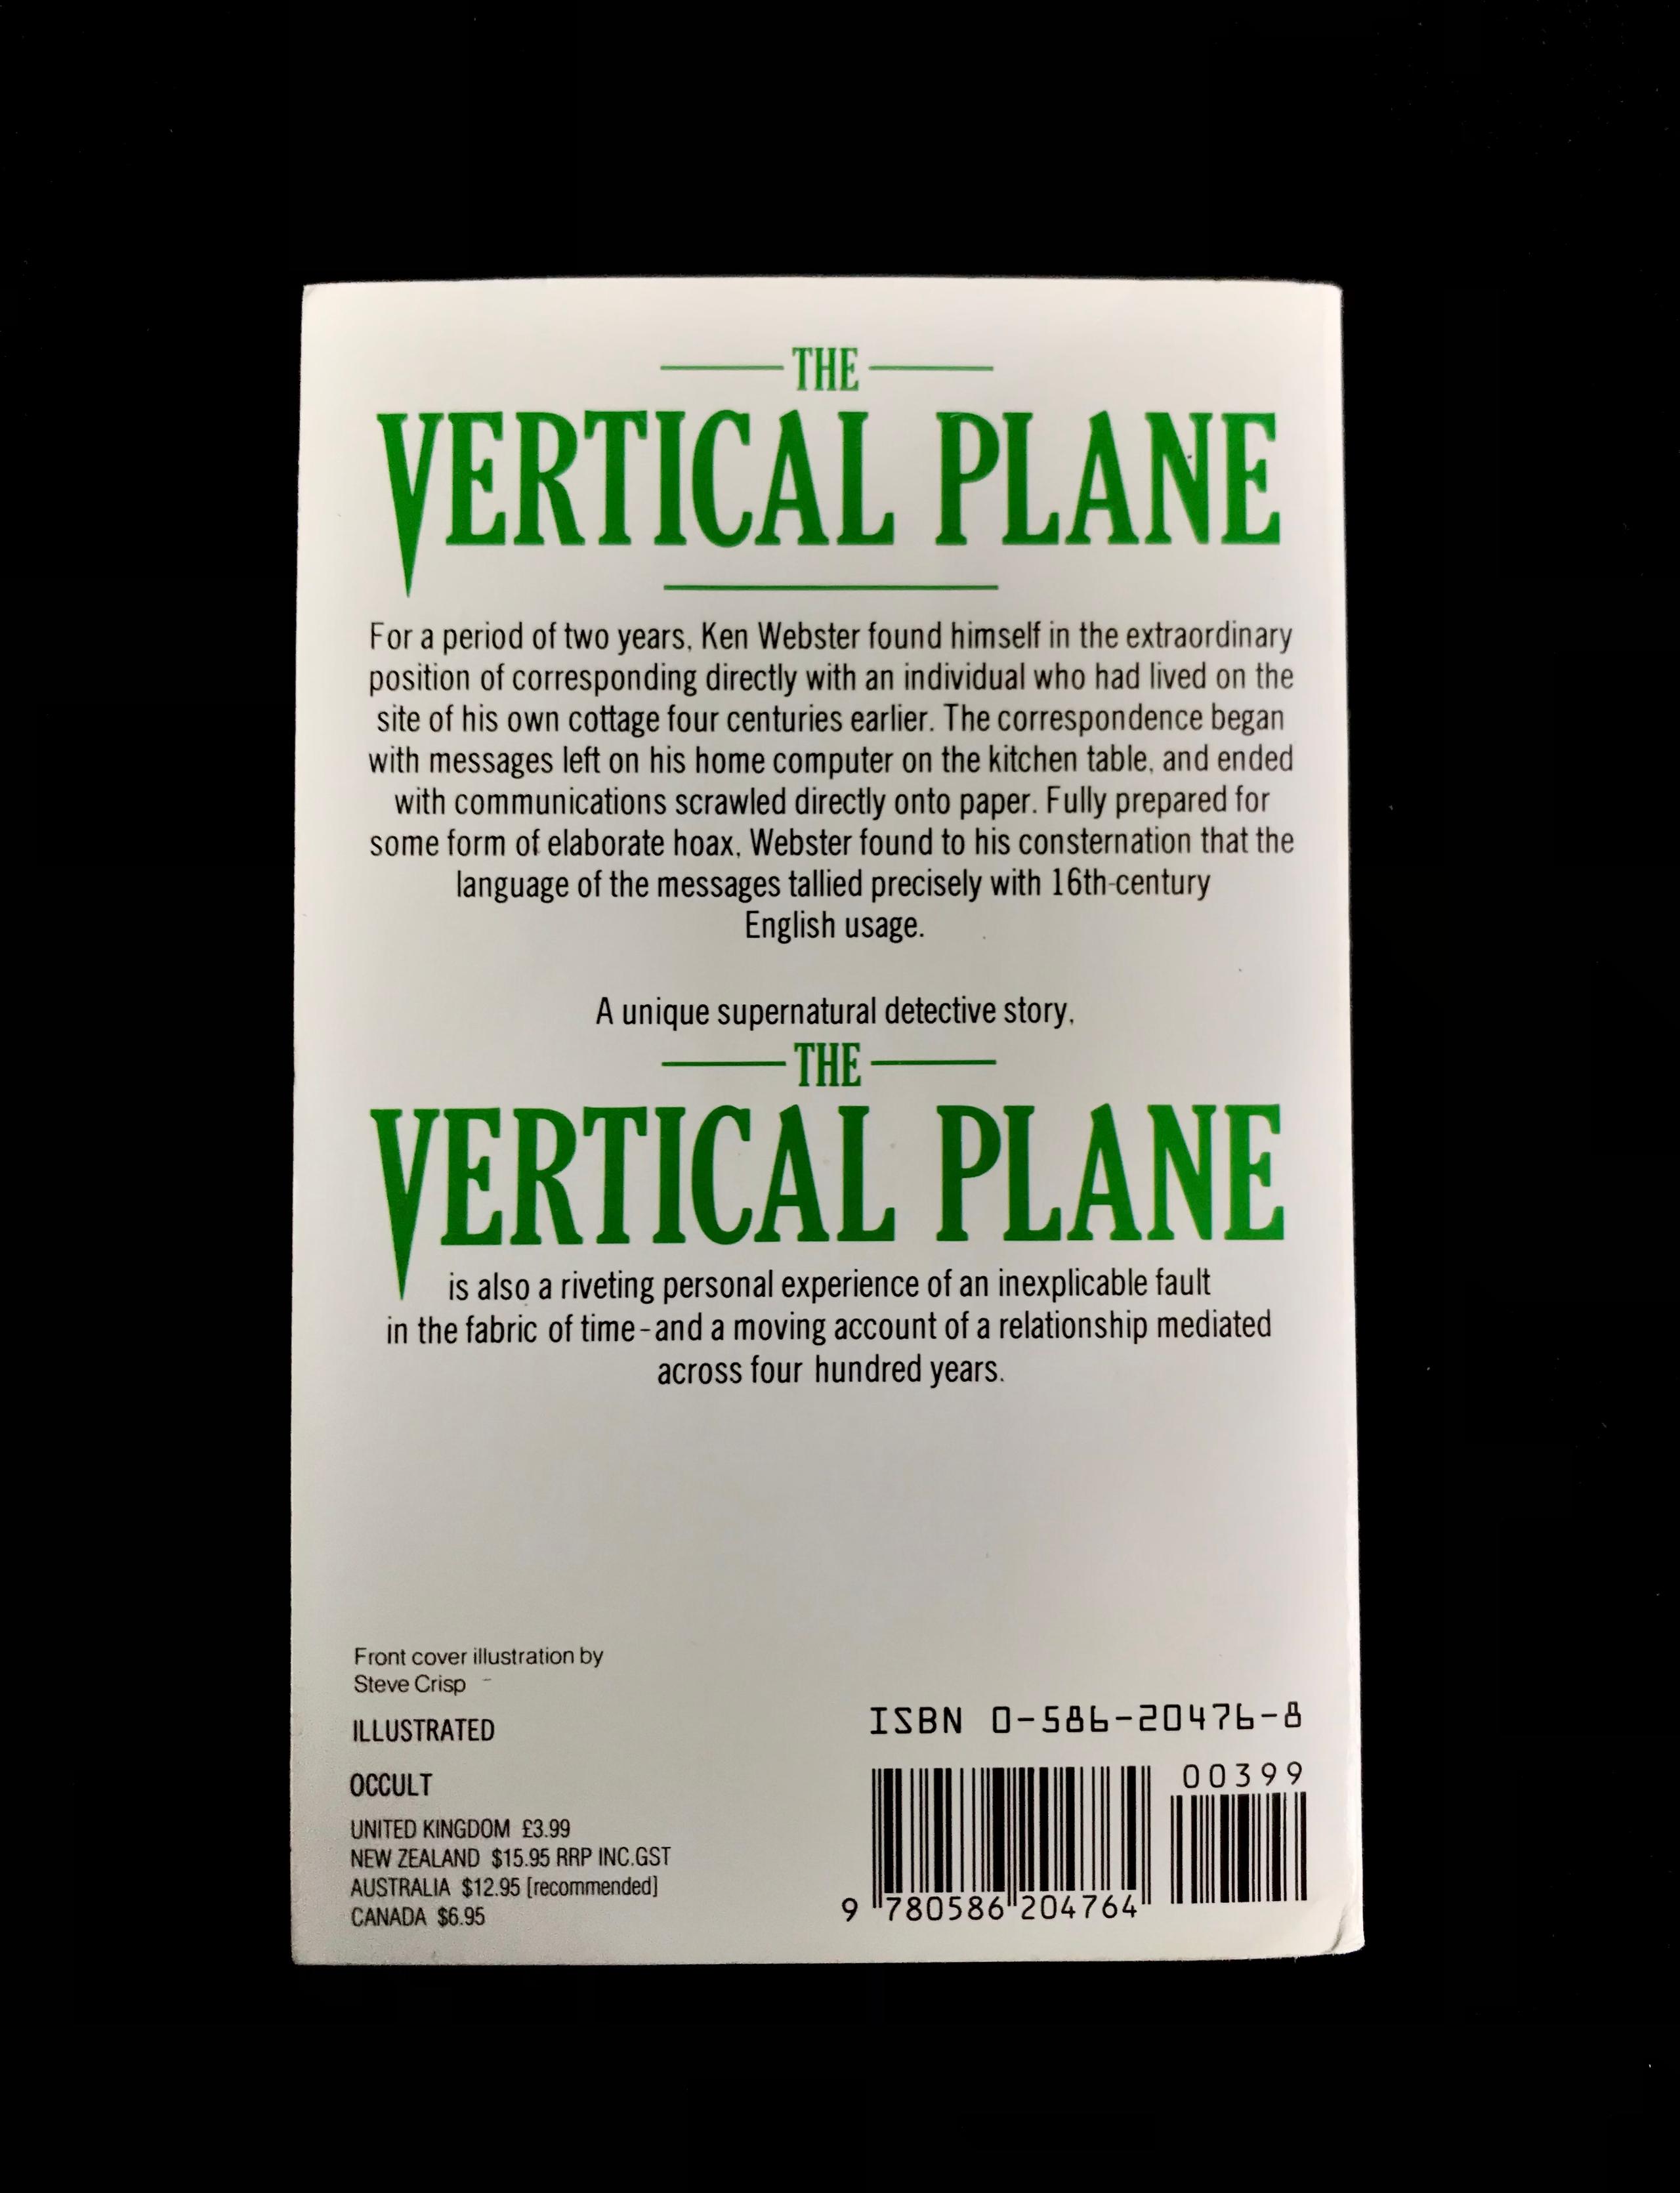 The Vertical Plane by Ken Webster